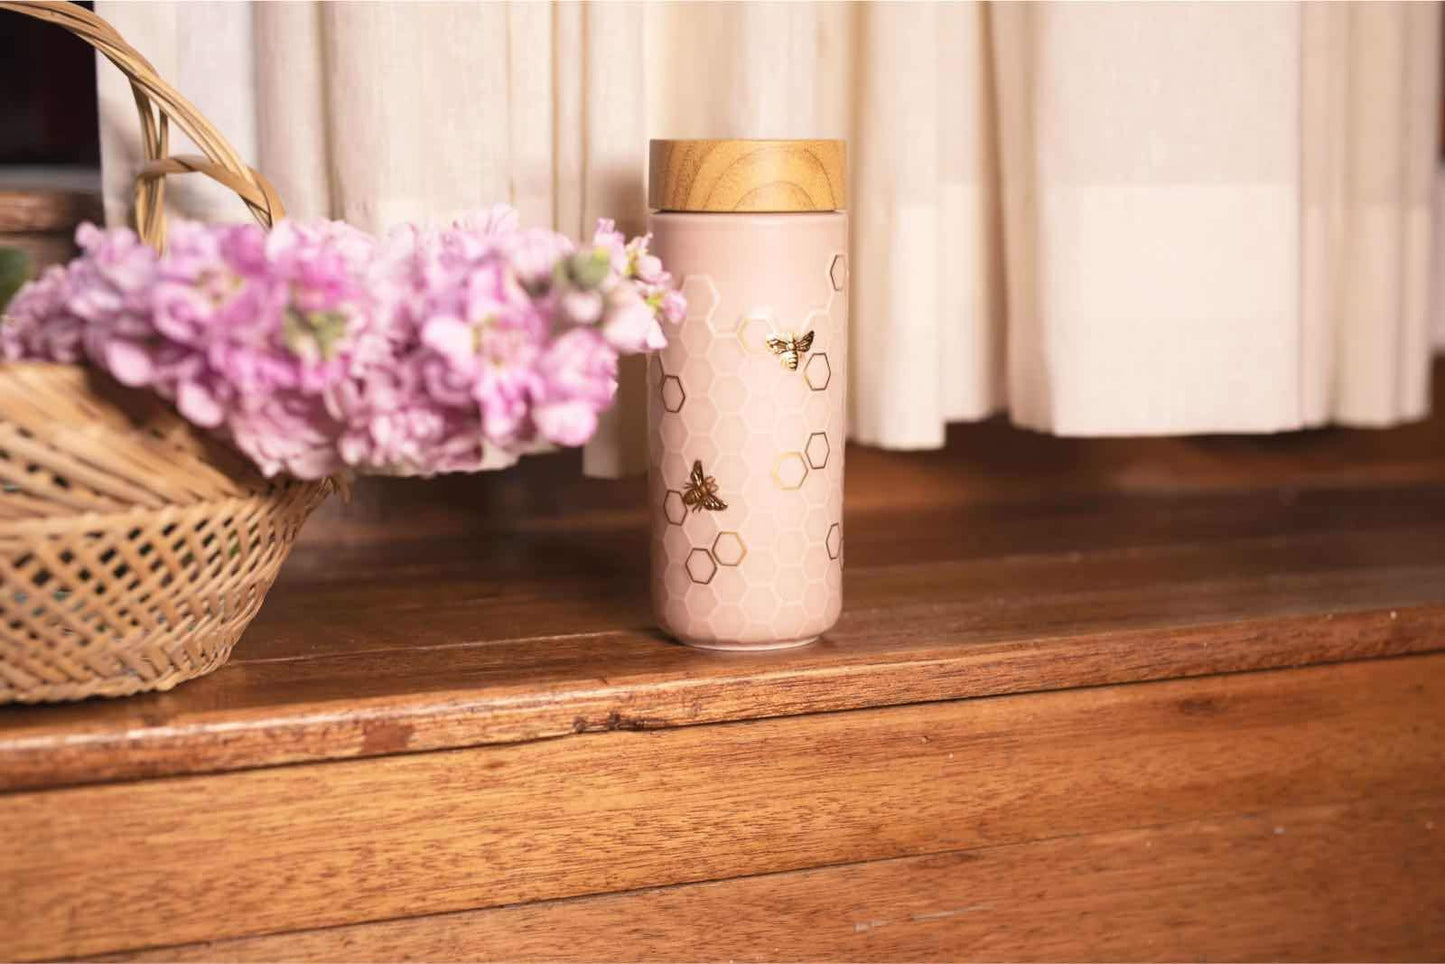 Honey Bee Ceramic Travel Mug